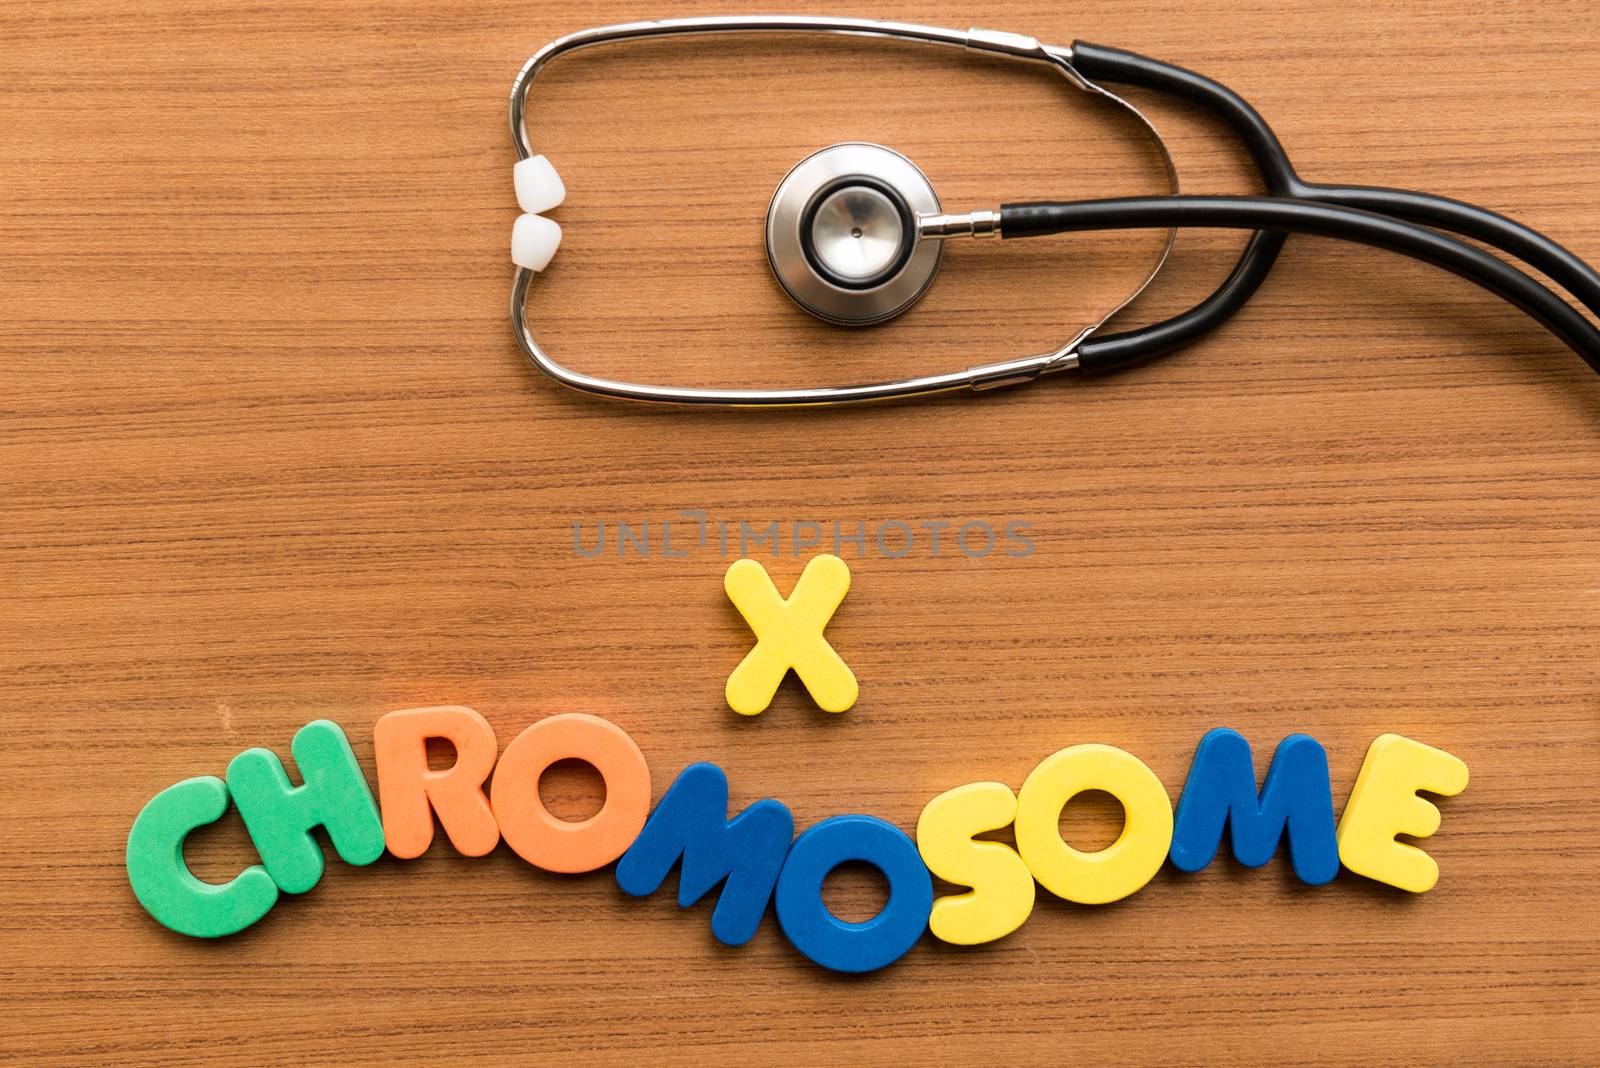 X chromosome colorful word with stethoscope by sohel.parvez@hotmail.com